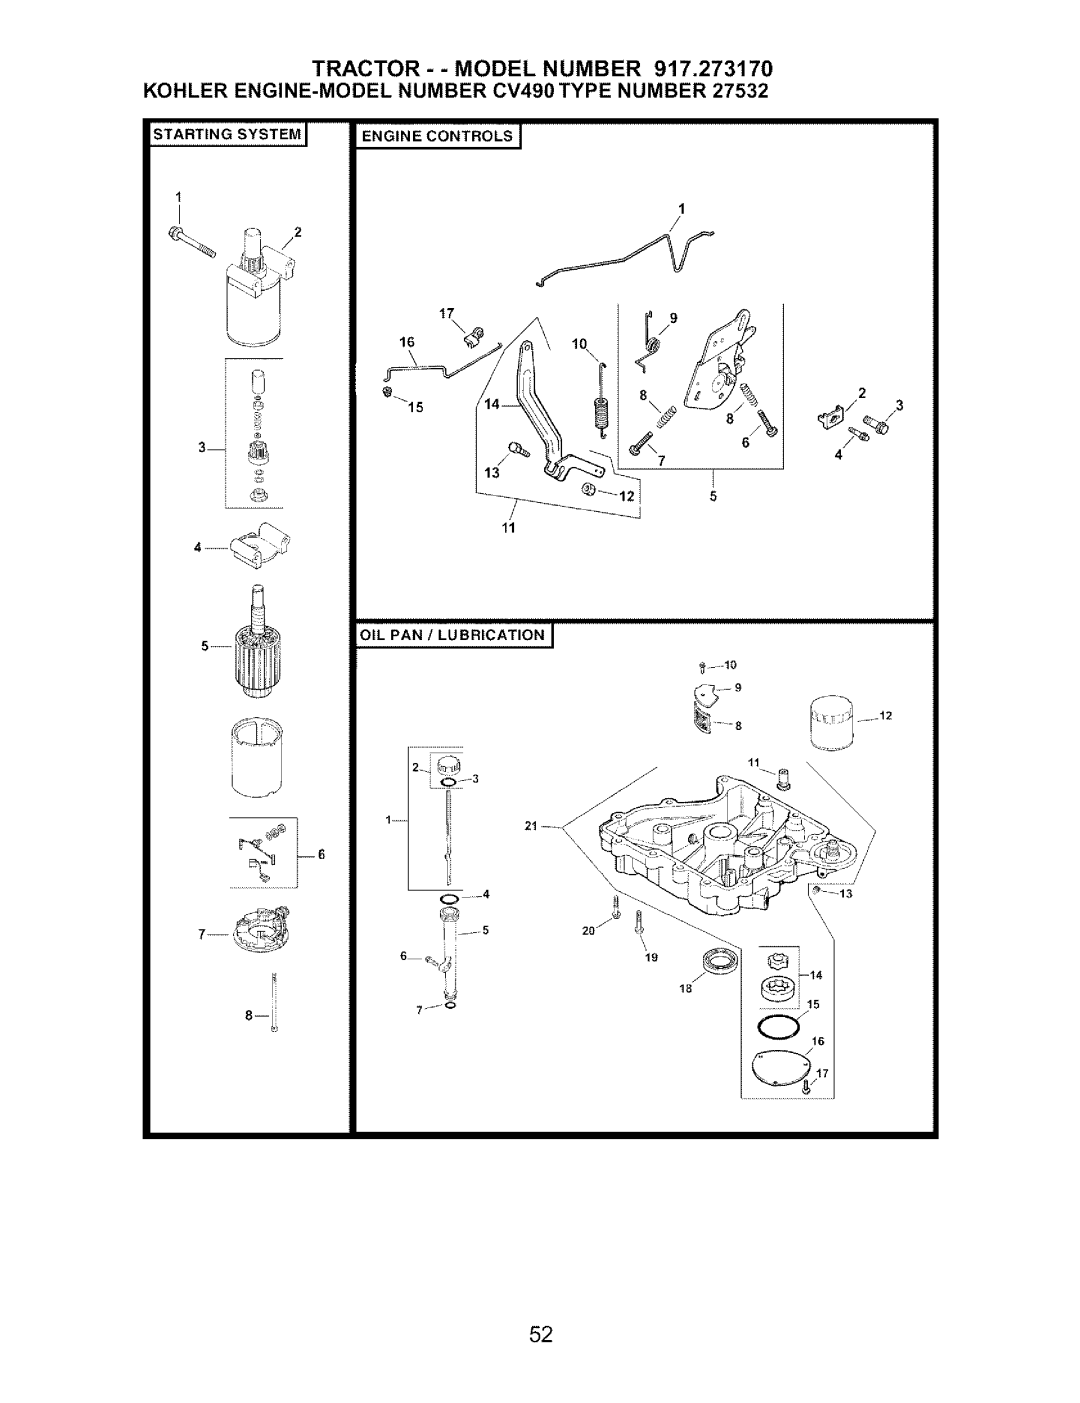 Craftsman 917.27317 owner manual Starting Systemj, Engine Controls, t14_, 4 11 OIL PAN / LUBRICATION J 